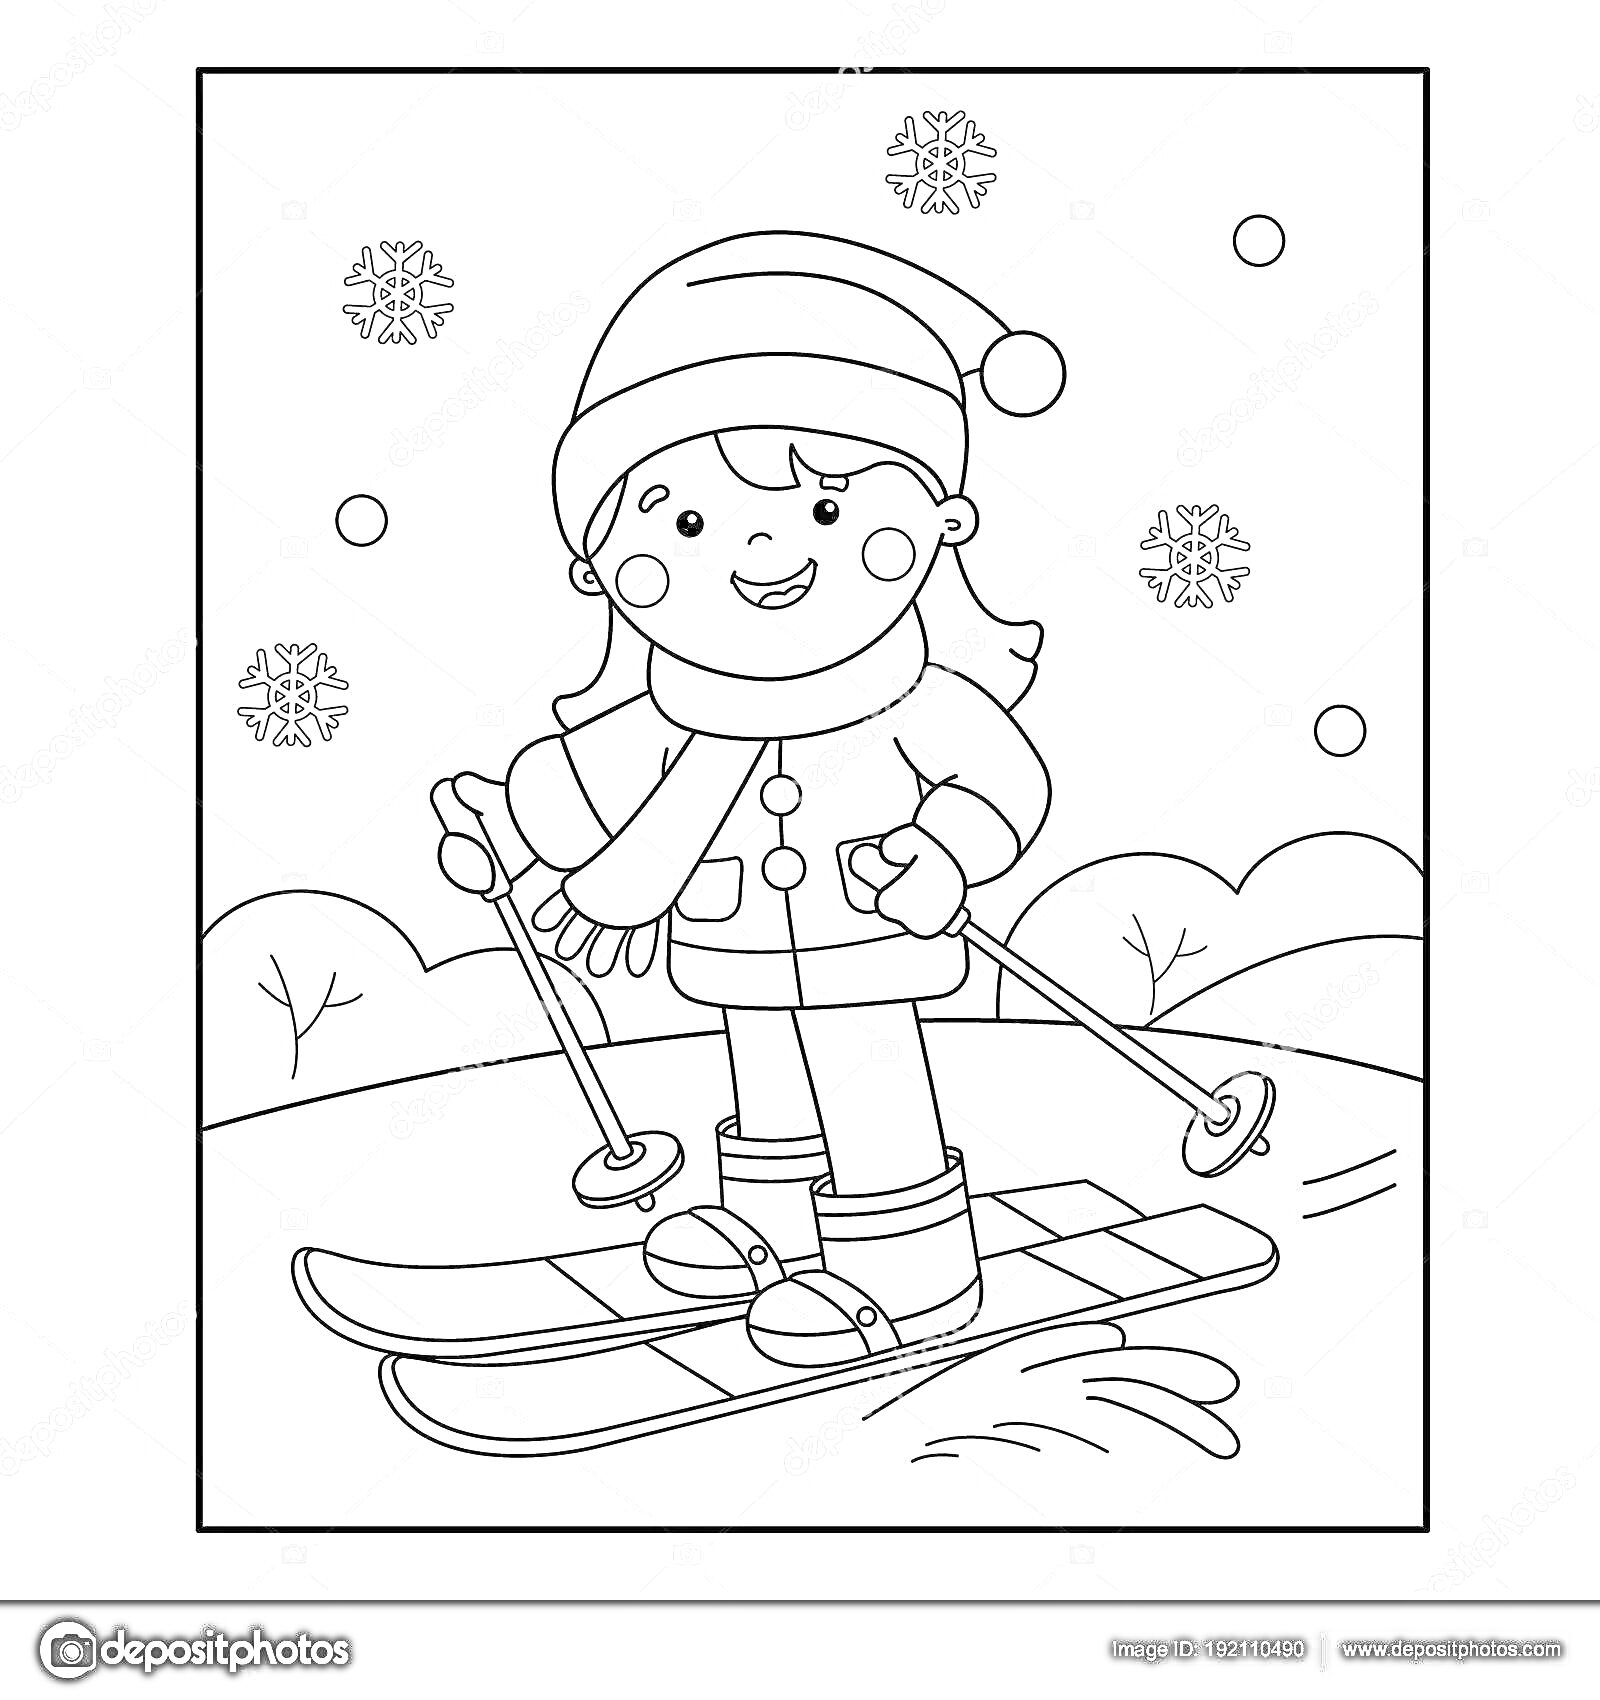 На раскраске изображено: Лыжник, Зима, Снег, Лыжи, Зимняя одежда, Шапка, Палки, Ребенок, Снегопад, Снежинки